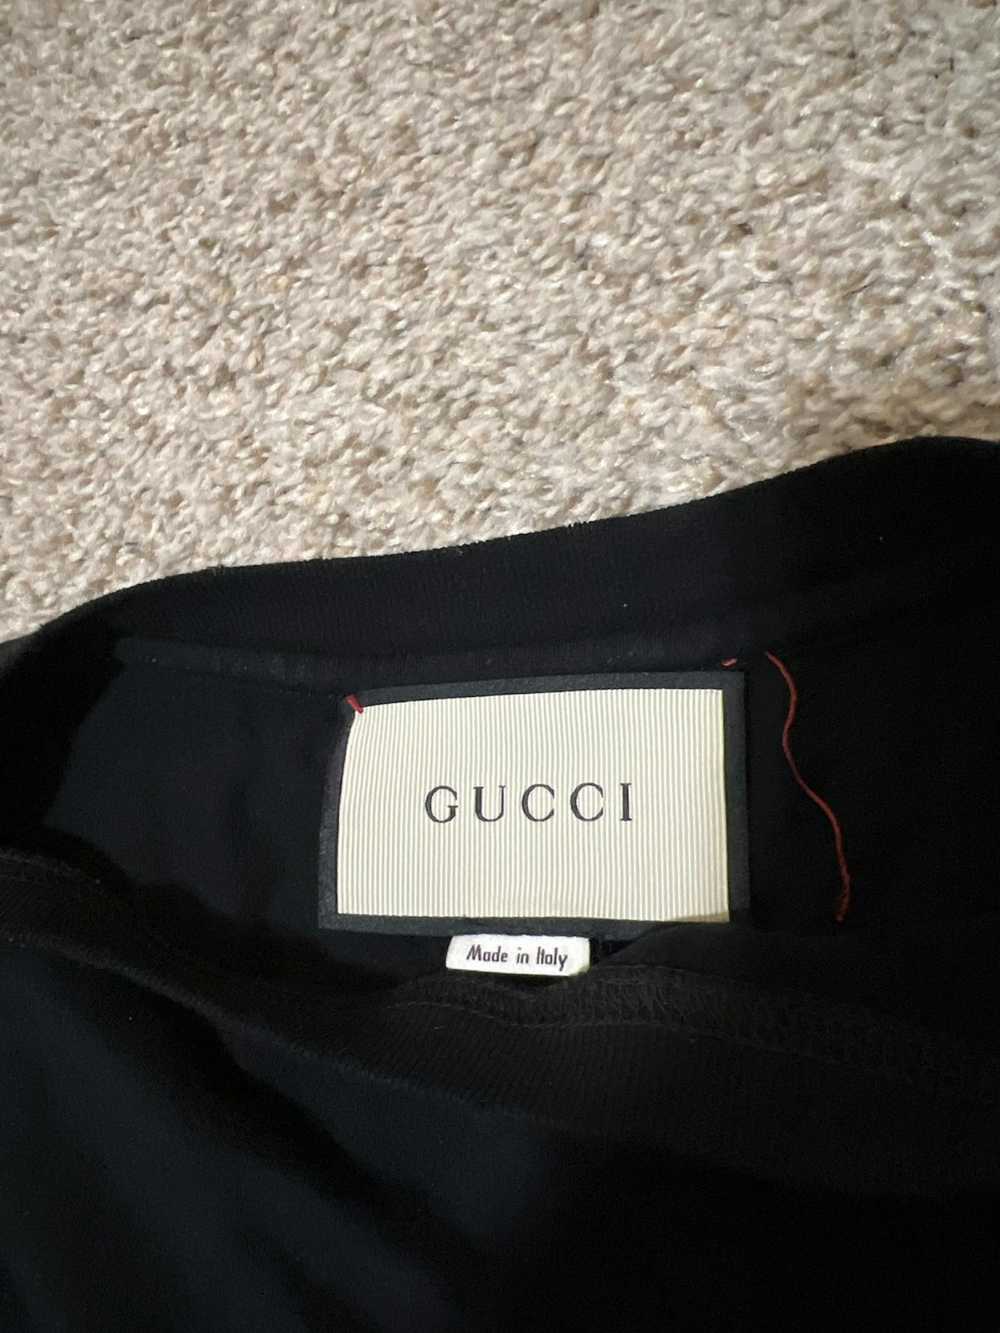 Gucci Gucci - vintage logo black t-shirt - image 9